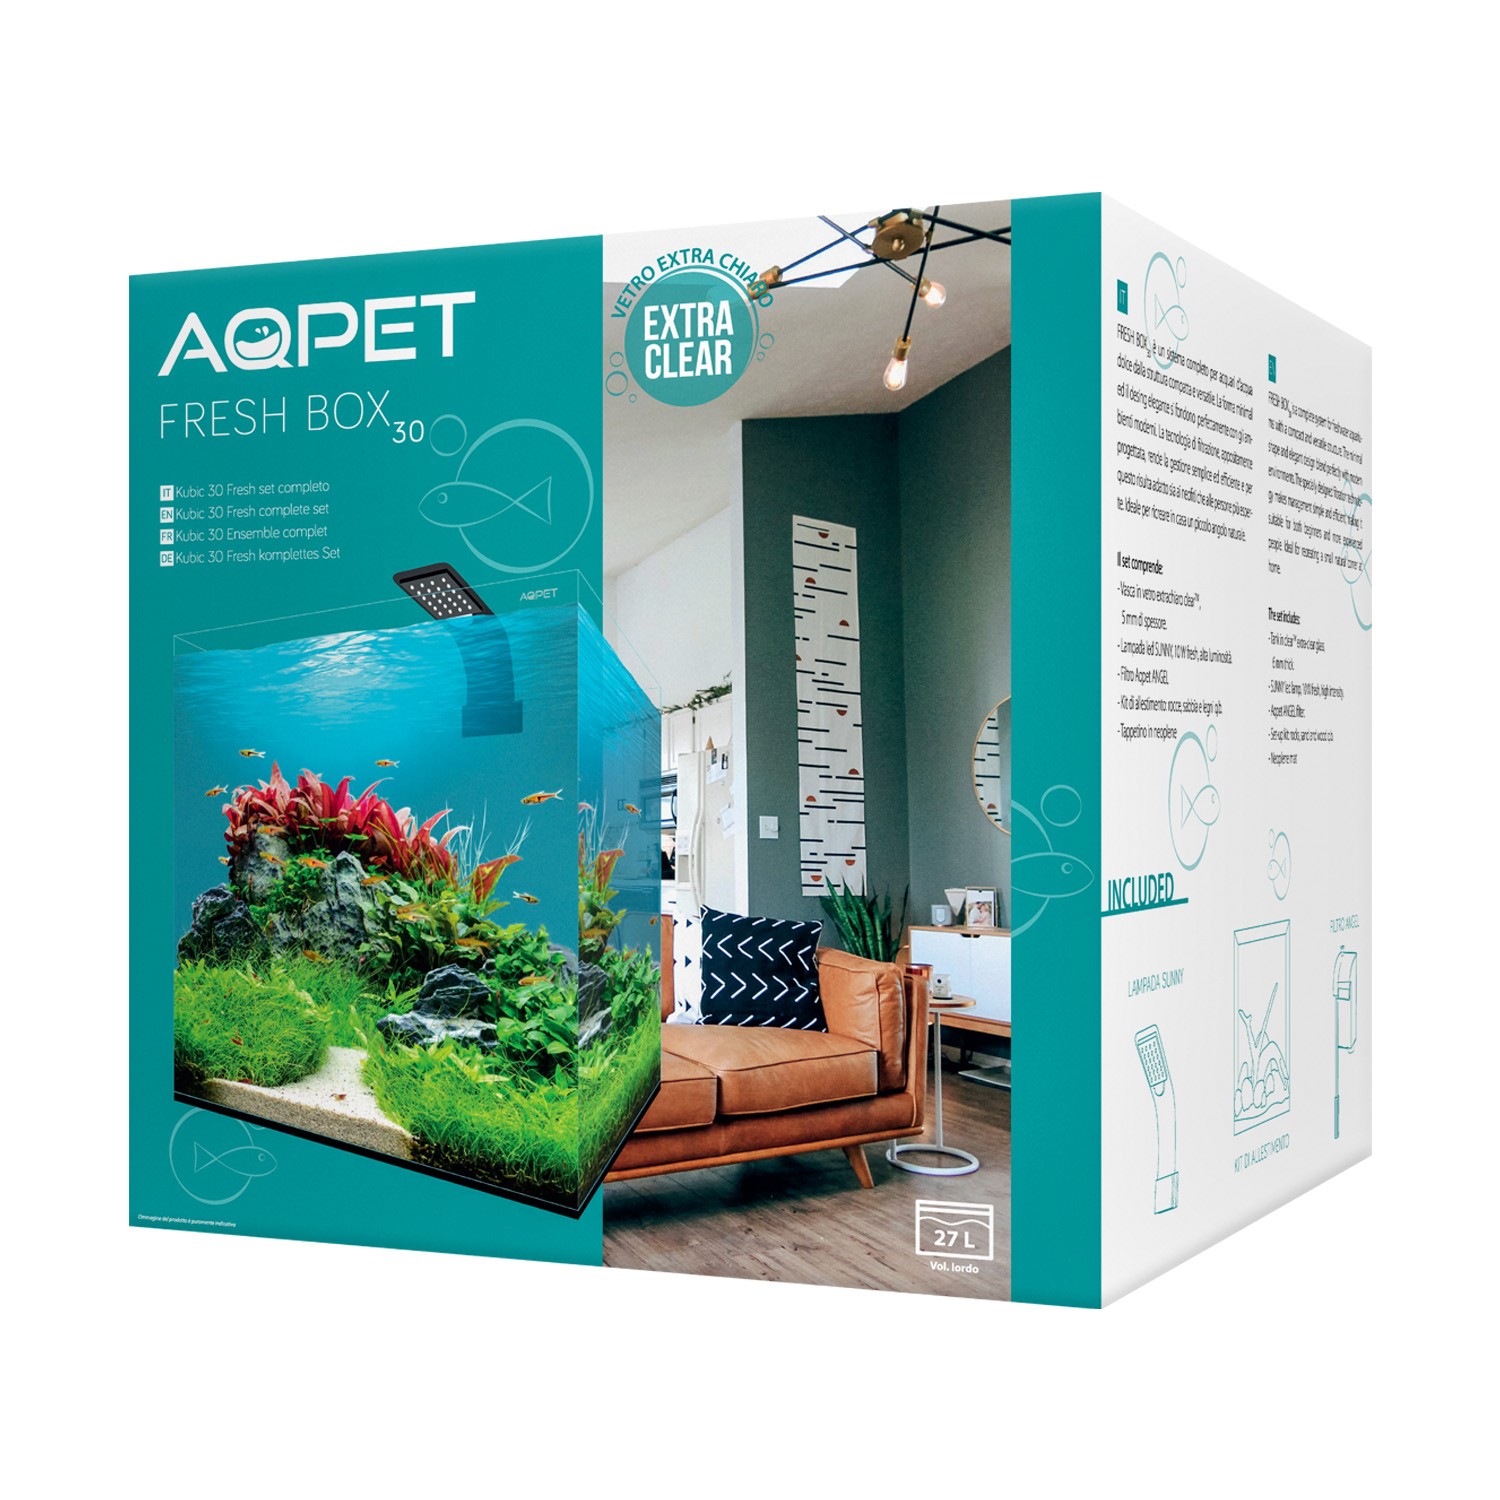 KIT completo Fresh Box 30 AQPET (vasca+luci+filtro+allestimento)